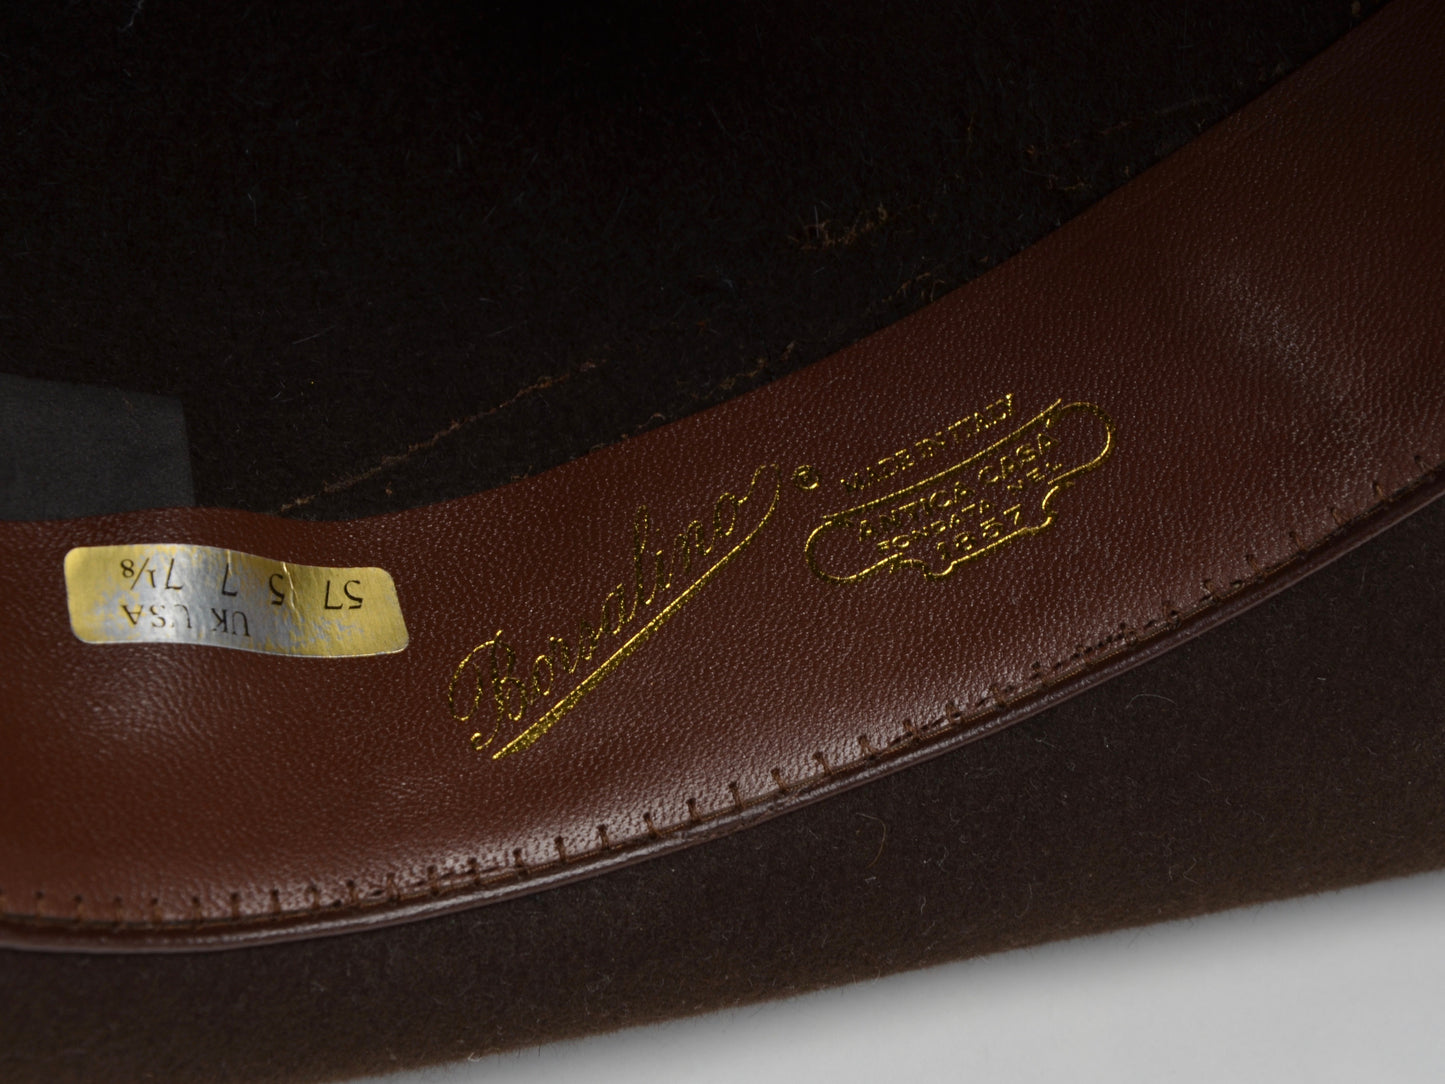 Borsalino Felt Hat Size 57 - Chocolate Brown